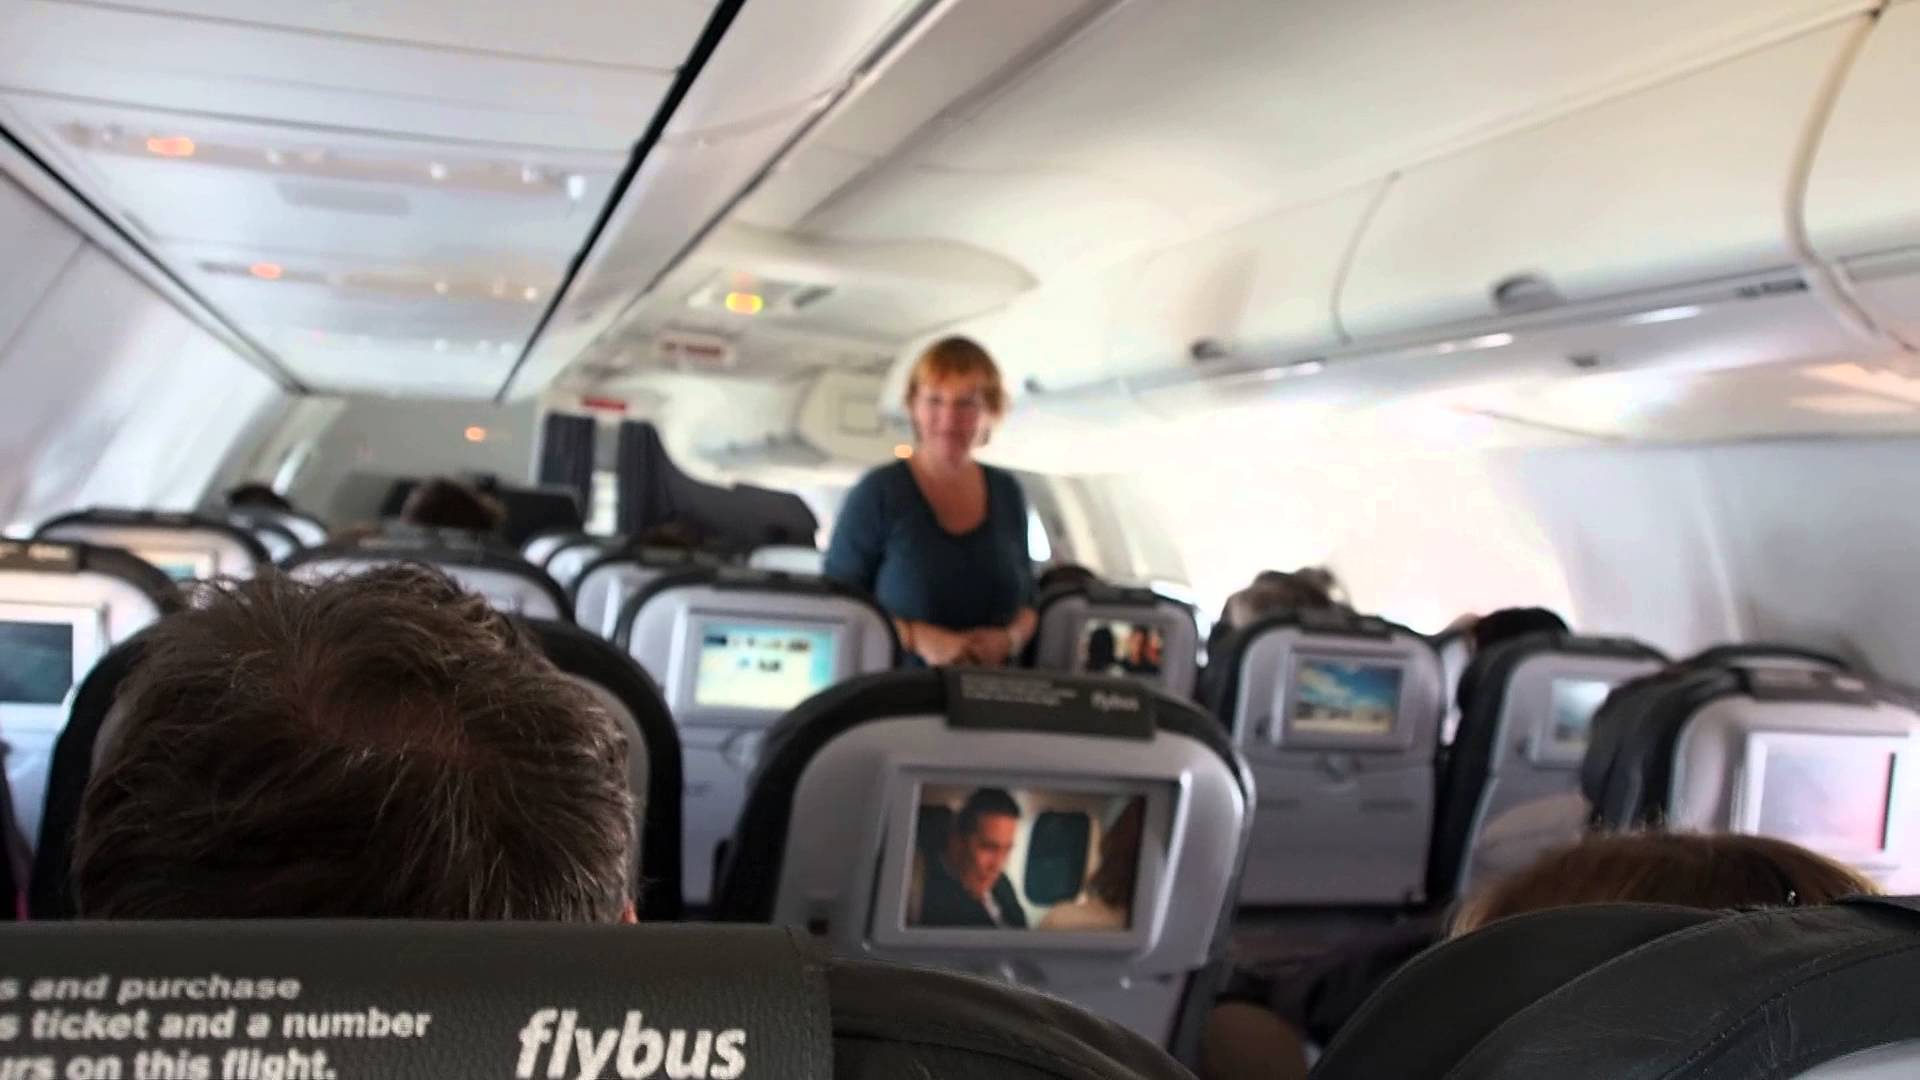 IcelandAir airplane interior autumn 2014 - YouTube